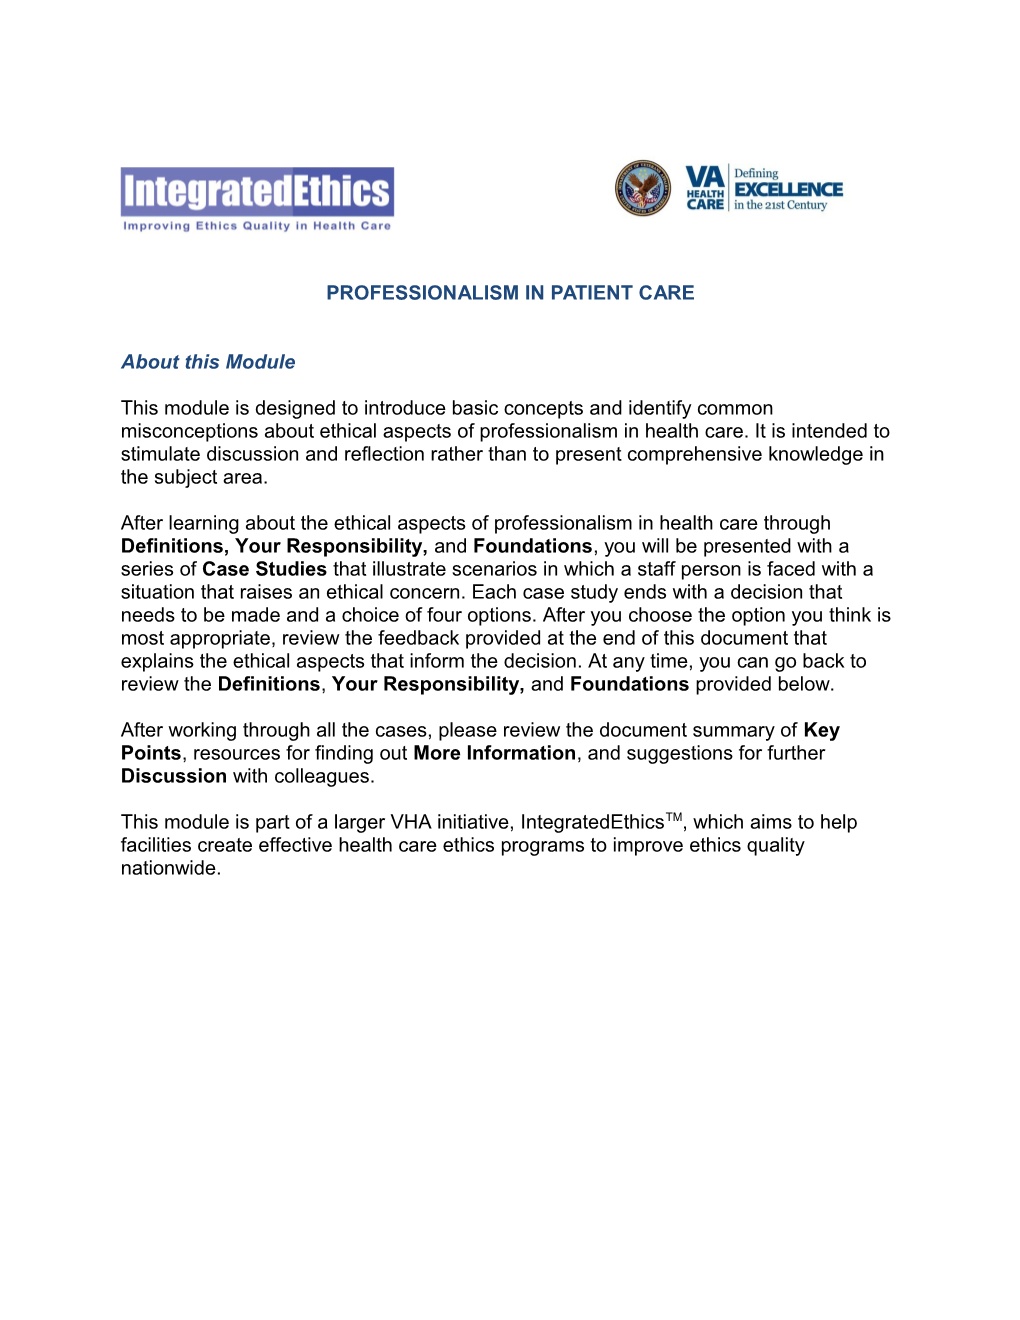 Integratedethics Module - Professionalism in Patient Care - US Department of Veterans Affairs